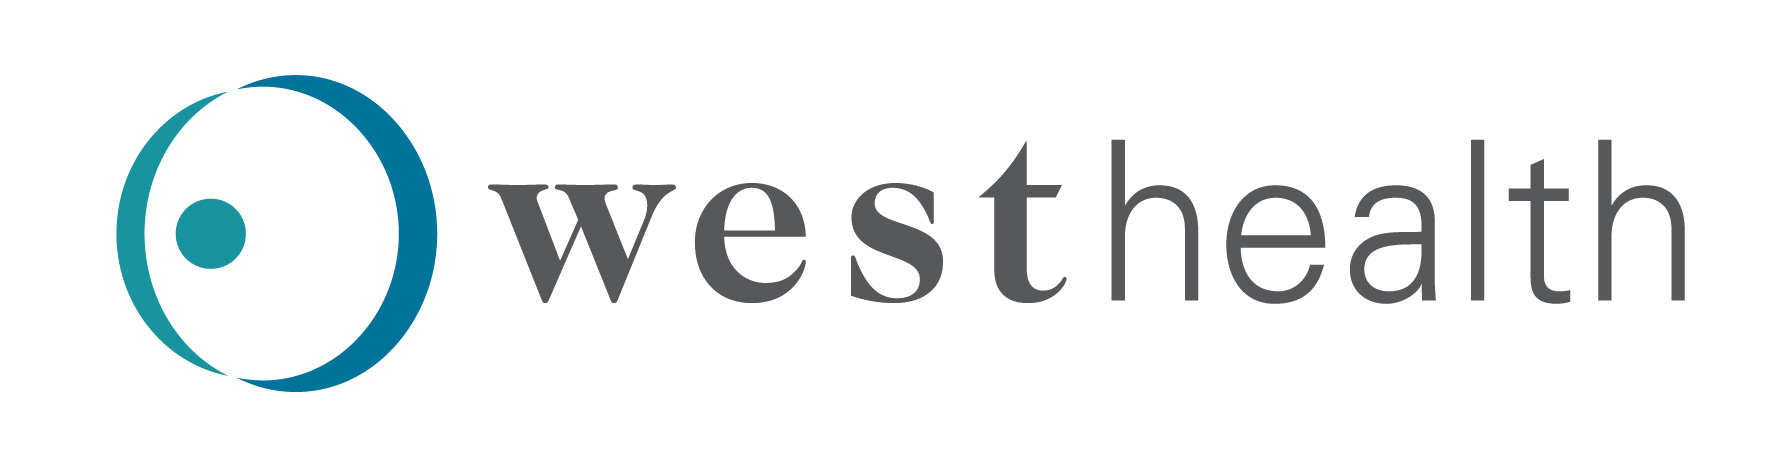 west_health_new_logo-01